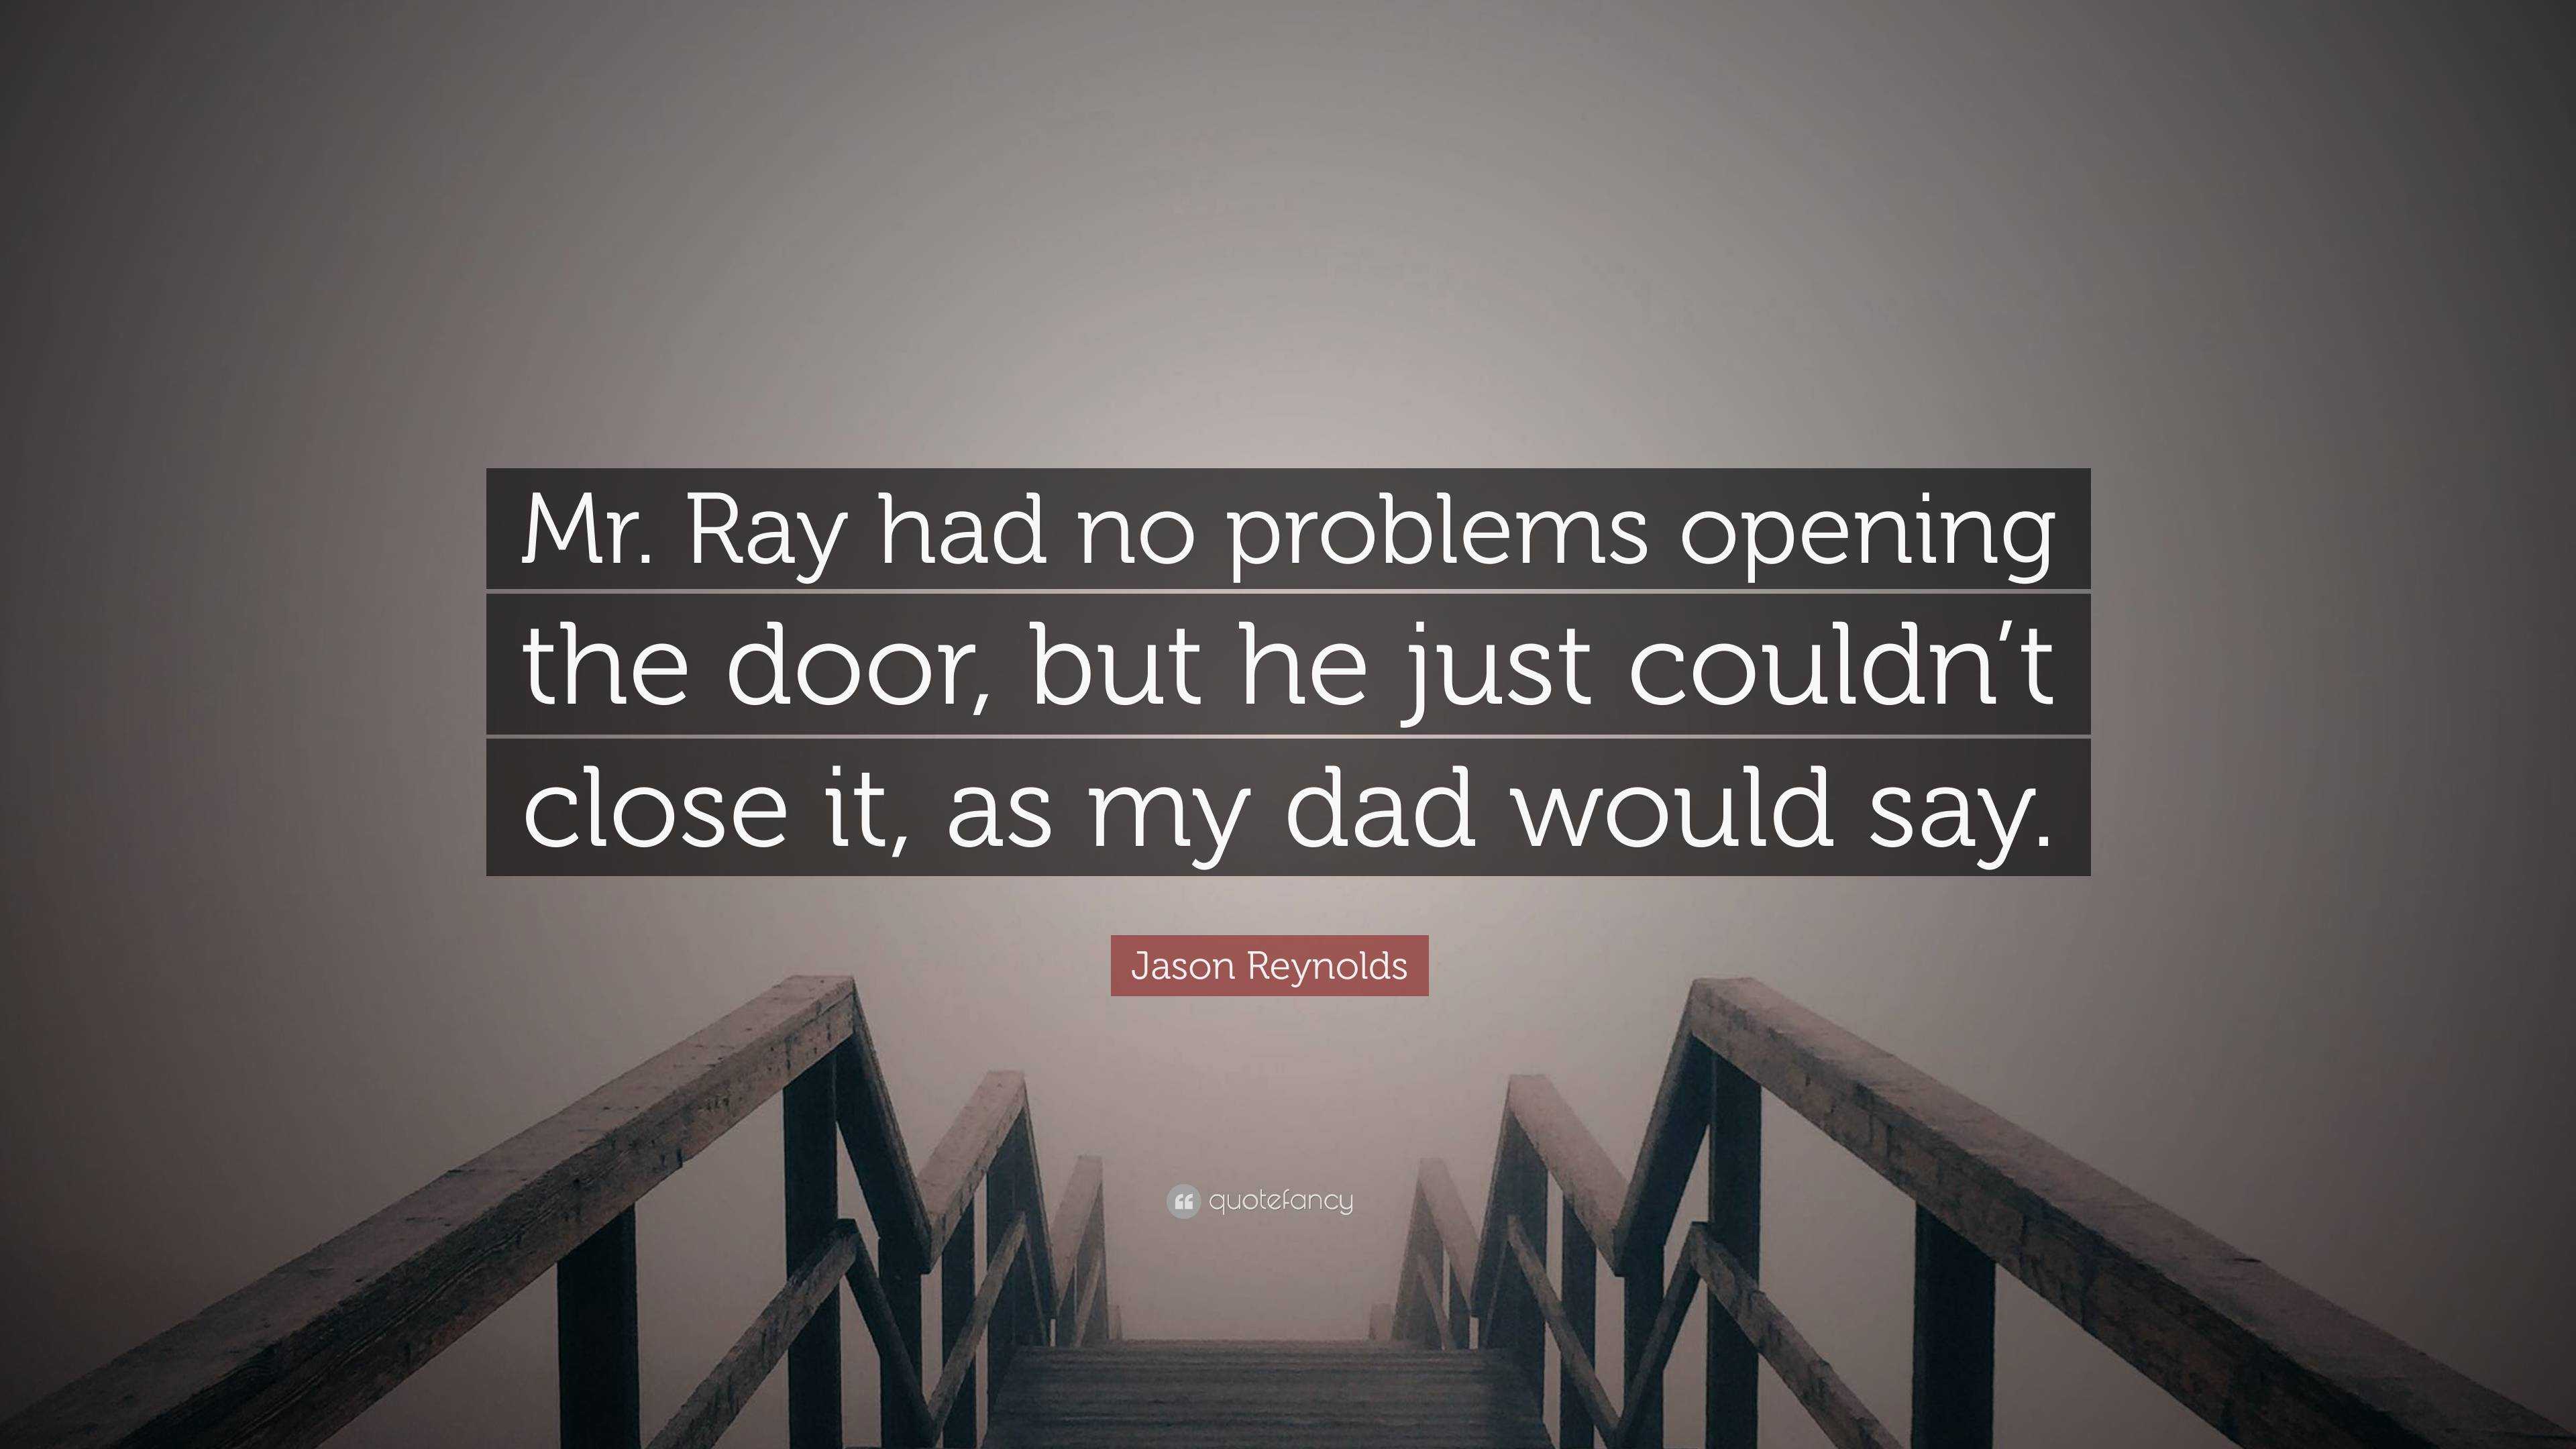 https://quotefancy.com/media/wallpaper/3840x2160/6641532-Jason-Reynolds-Quote-Mr-Ray-had-no-problems-opening-the-door-but.jpg